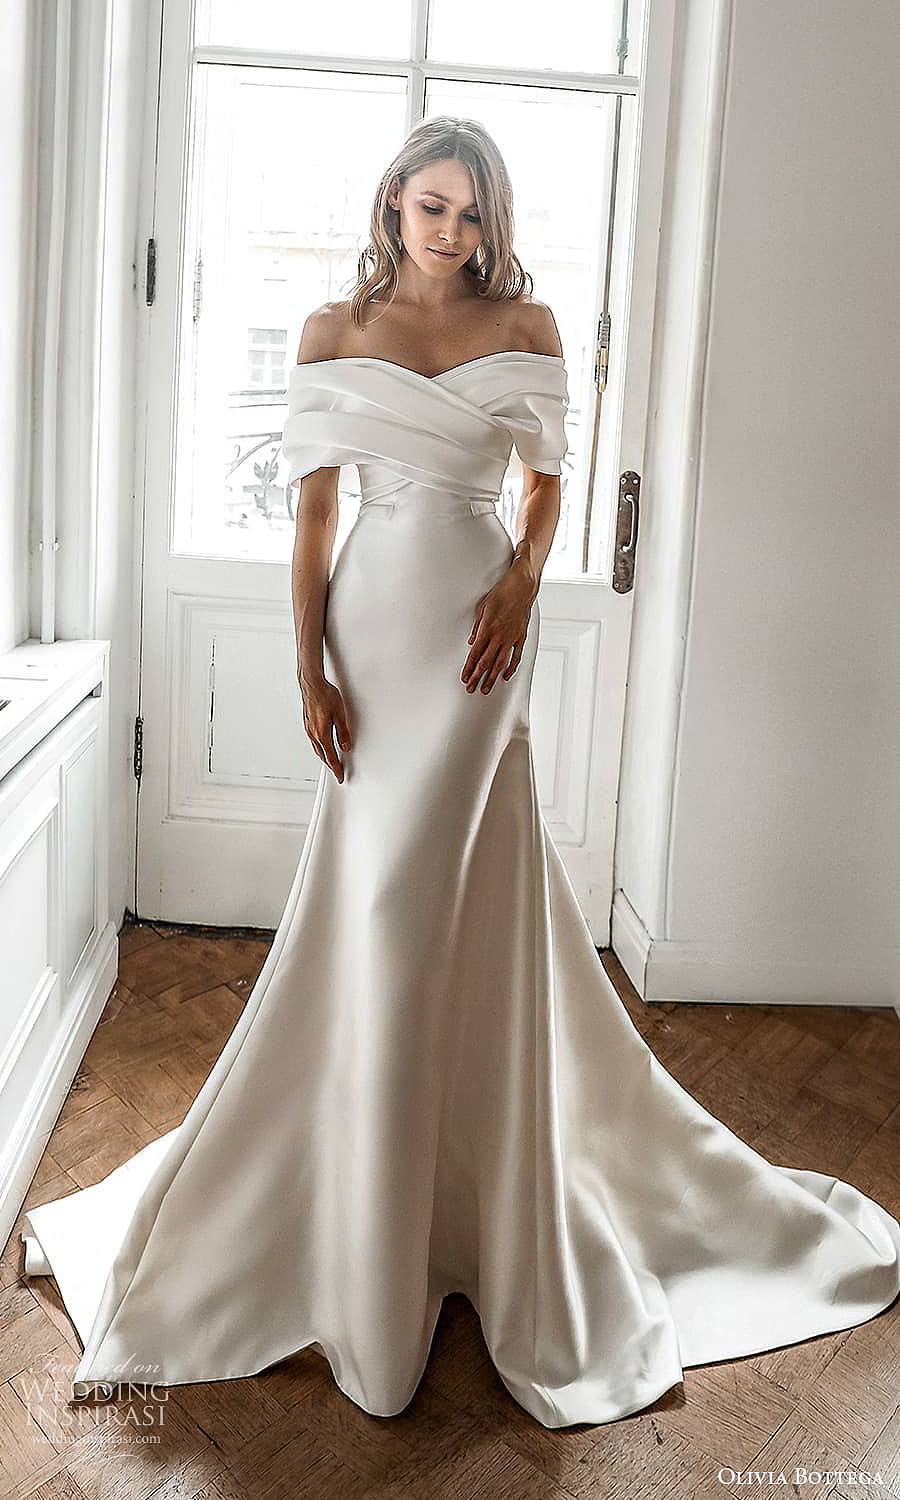 Olivia Bottega Pret-a-Porter 新娘系列 优雅百搭新娘嫁衣 - 27